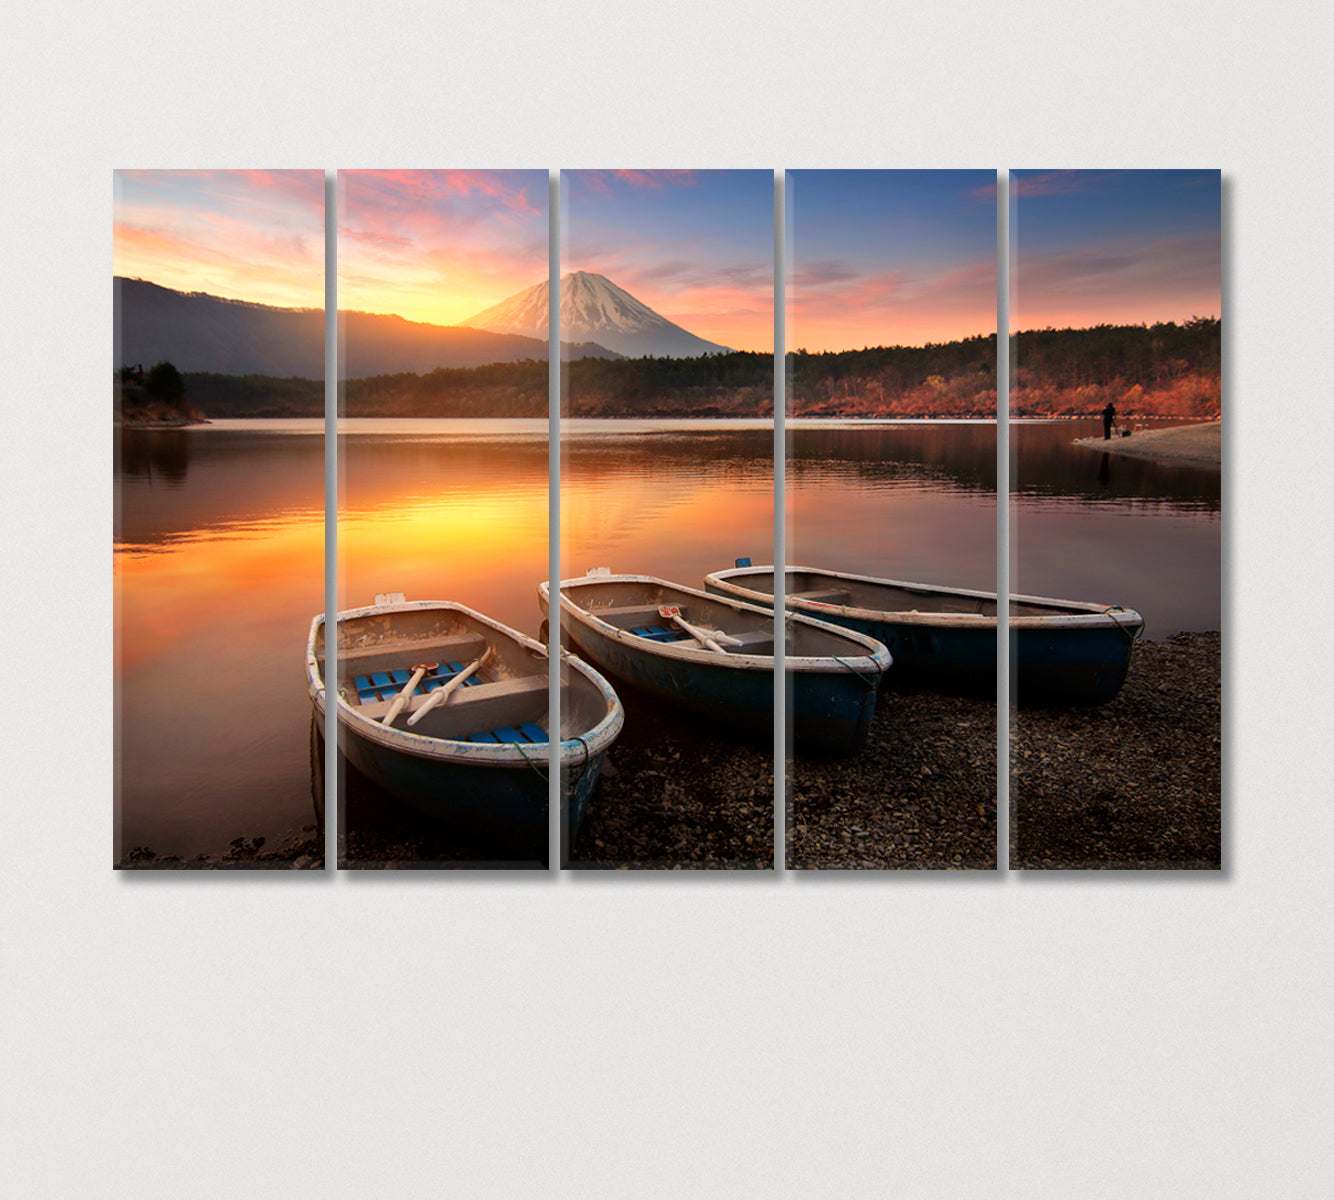 Boats Parked on the Shore of Lake Saiko Japan Canvas Print-Canvas Print-CetArt-5 Panels-36x24 inches-CetArt